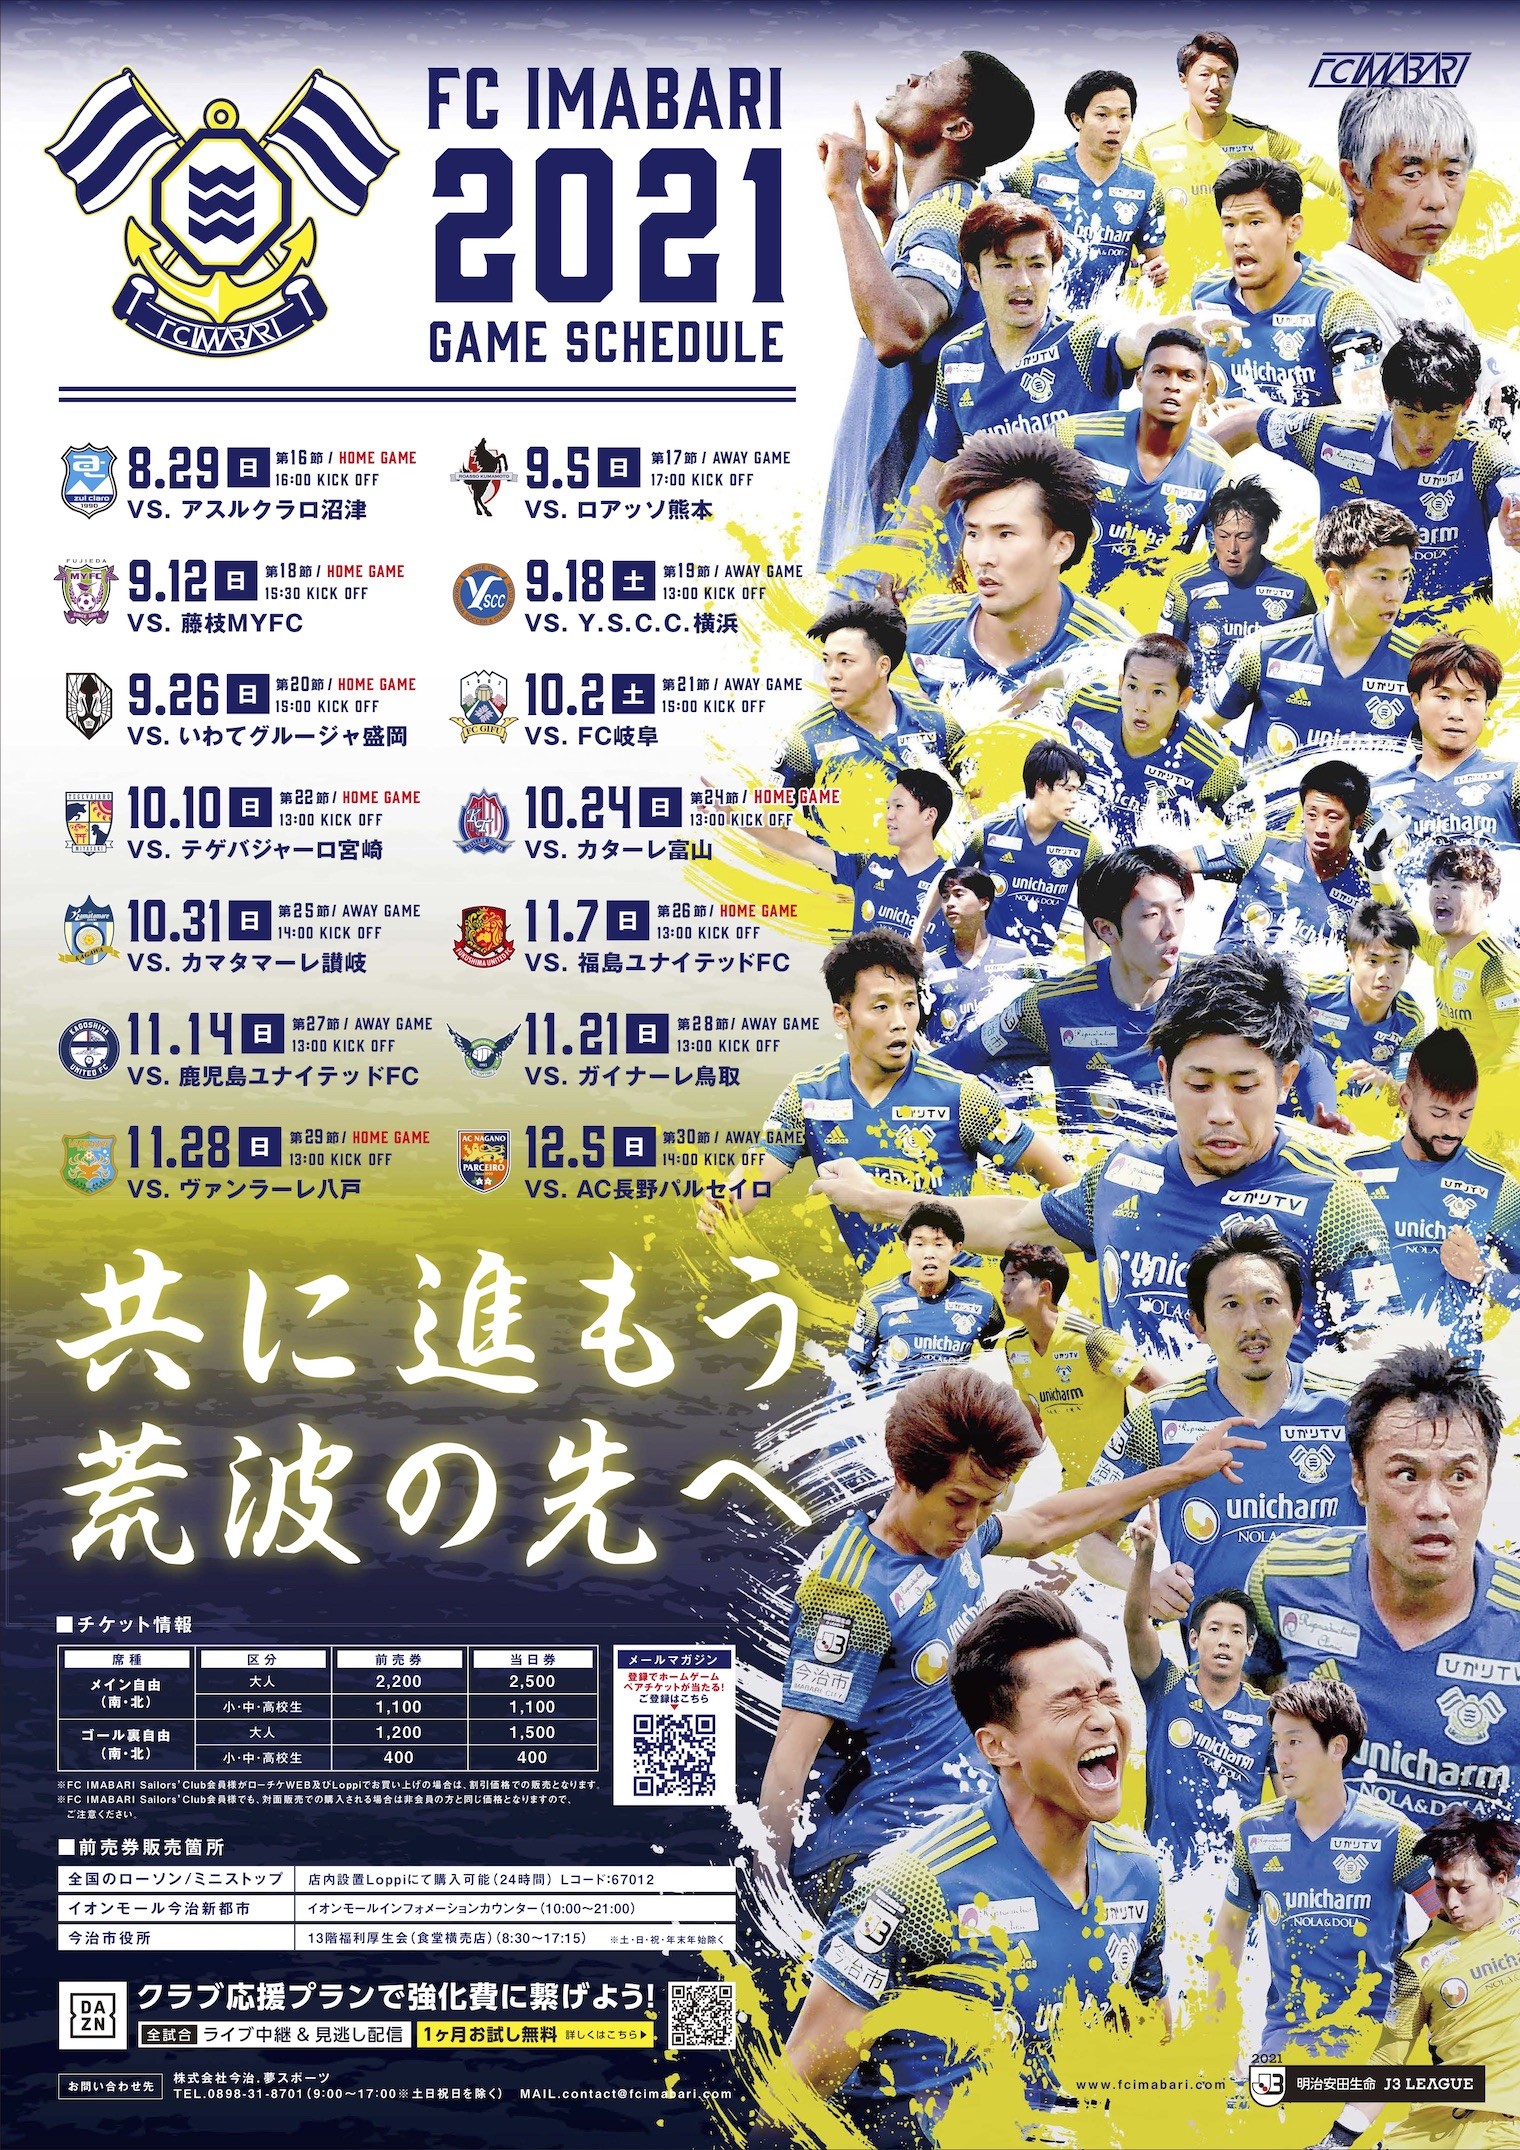 2021_FCimabari_poster_3.jpg